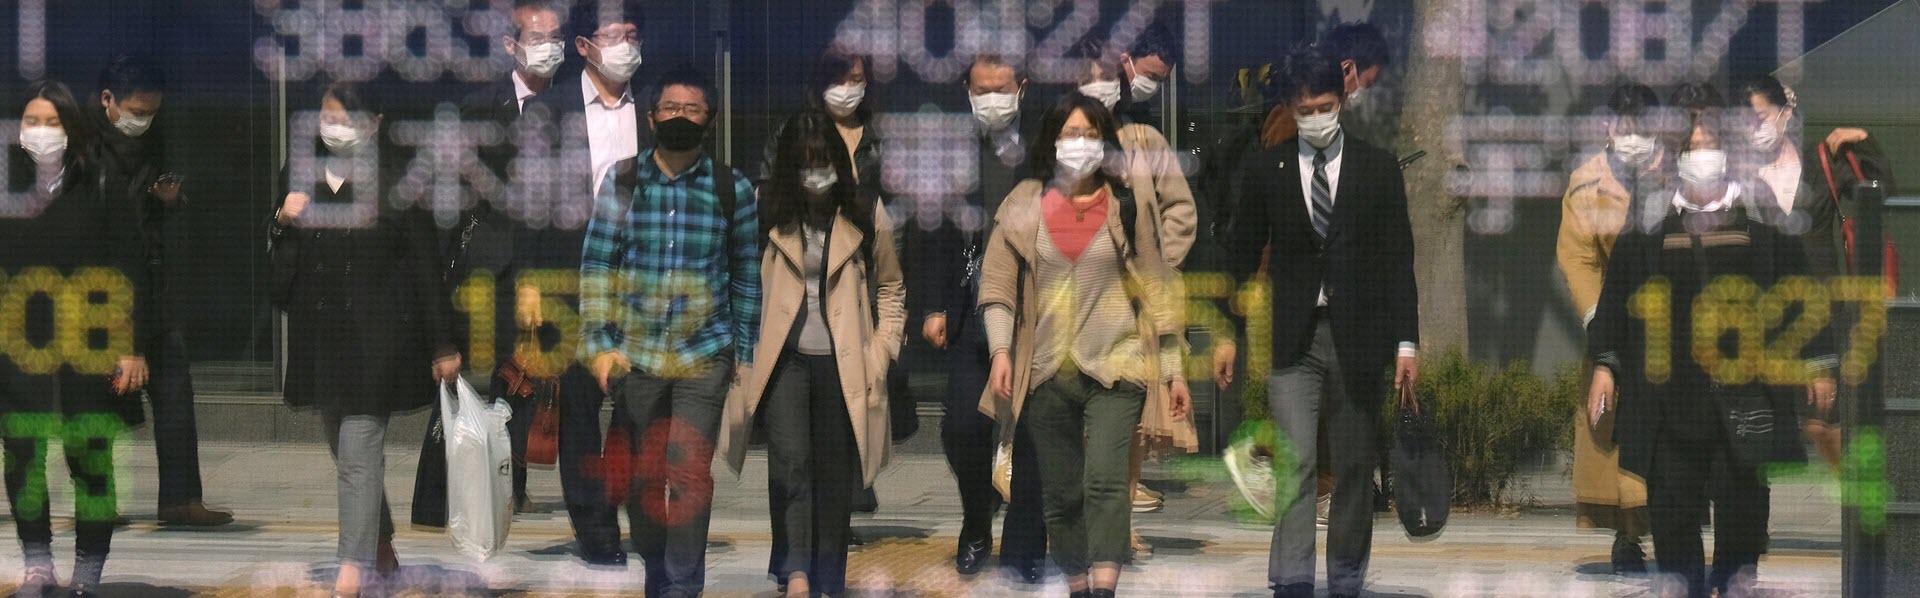 Japan stocks amid coronavirus outbreak